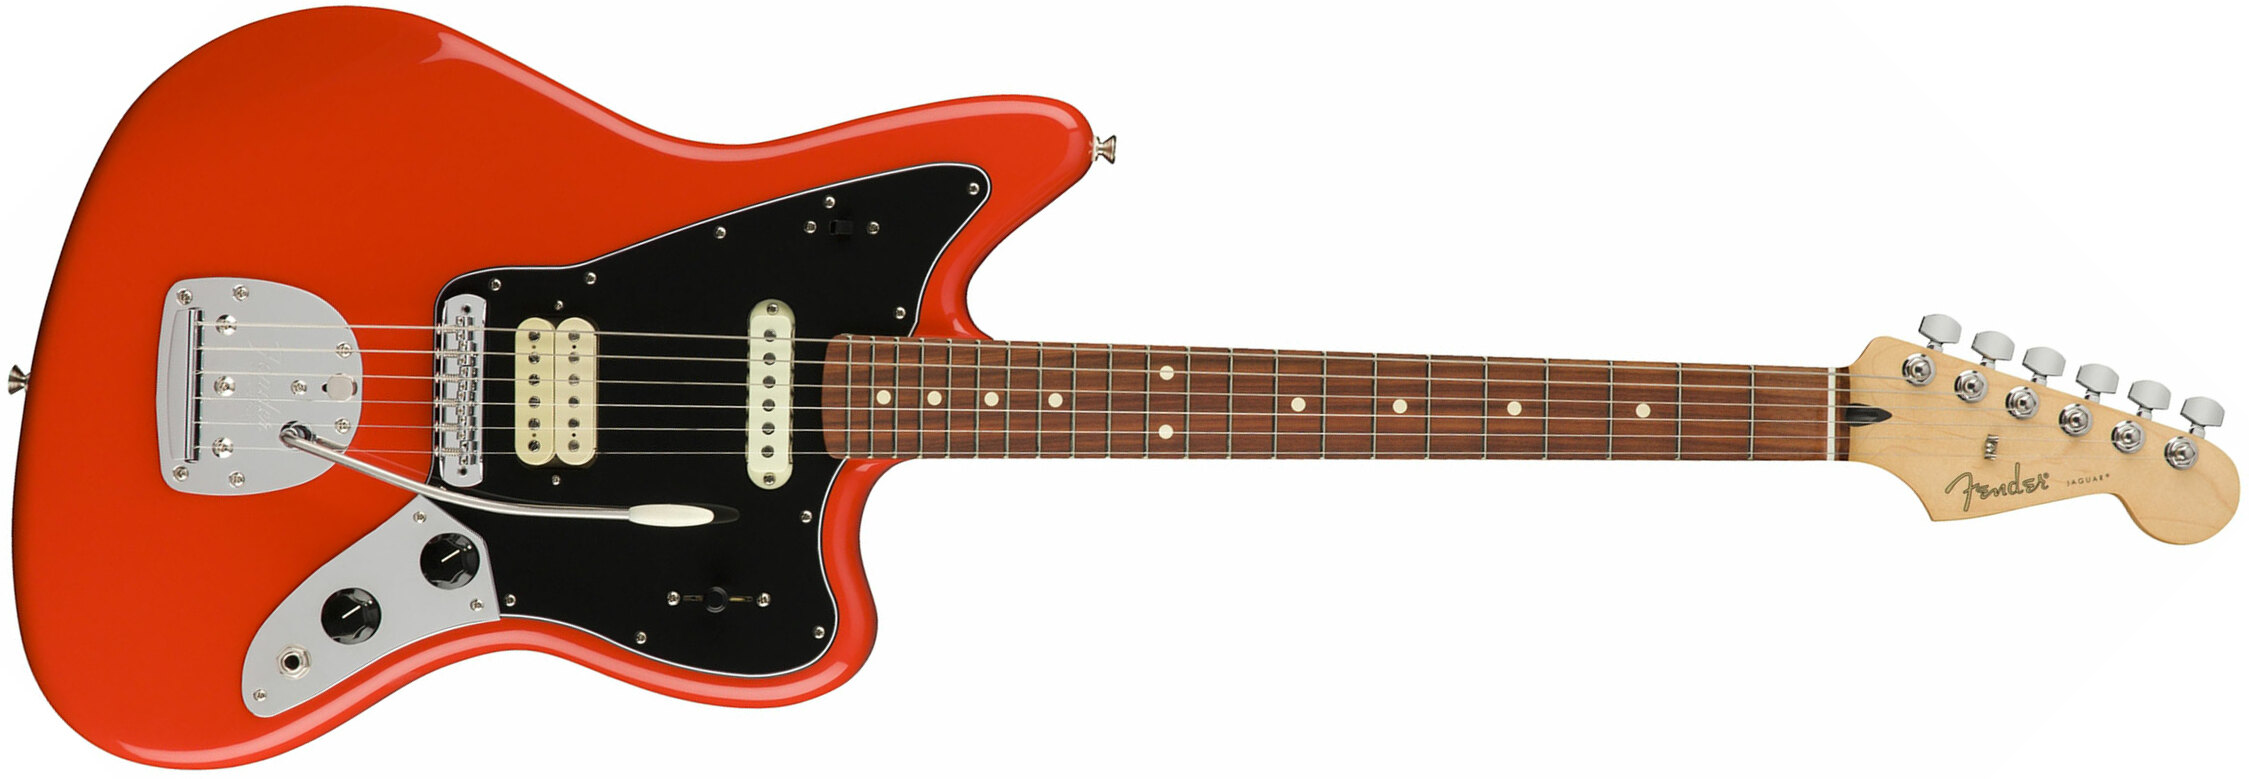 Fender Jaguar Player Mex Hs Pf - Sonic Red - Retro-rock elektrische gitaar - Main picture